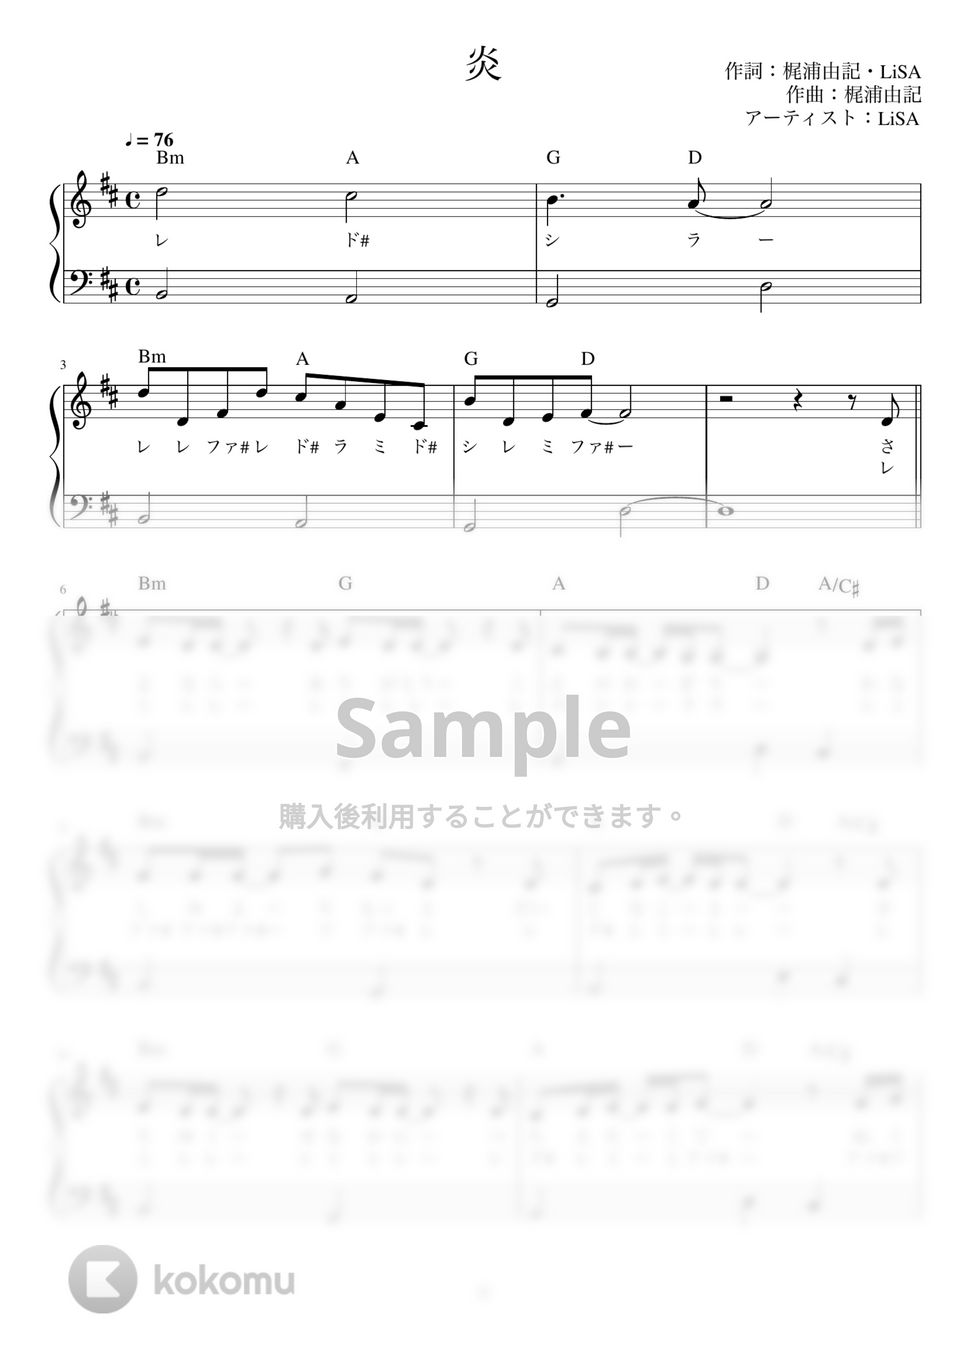 LiSA - 炎 (かんたん  / 歌詞付き / ドレミ付き / 初心者) by piano.tokyo